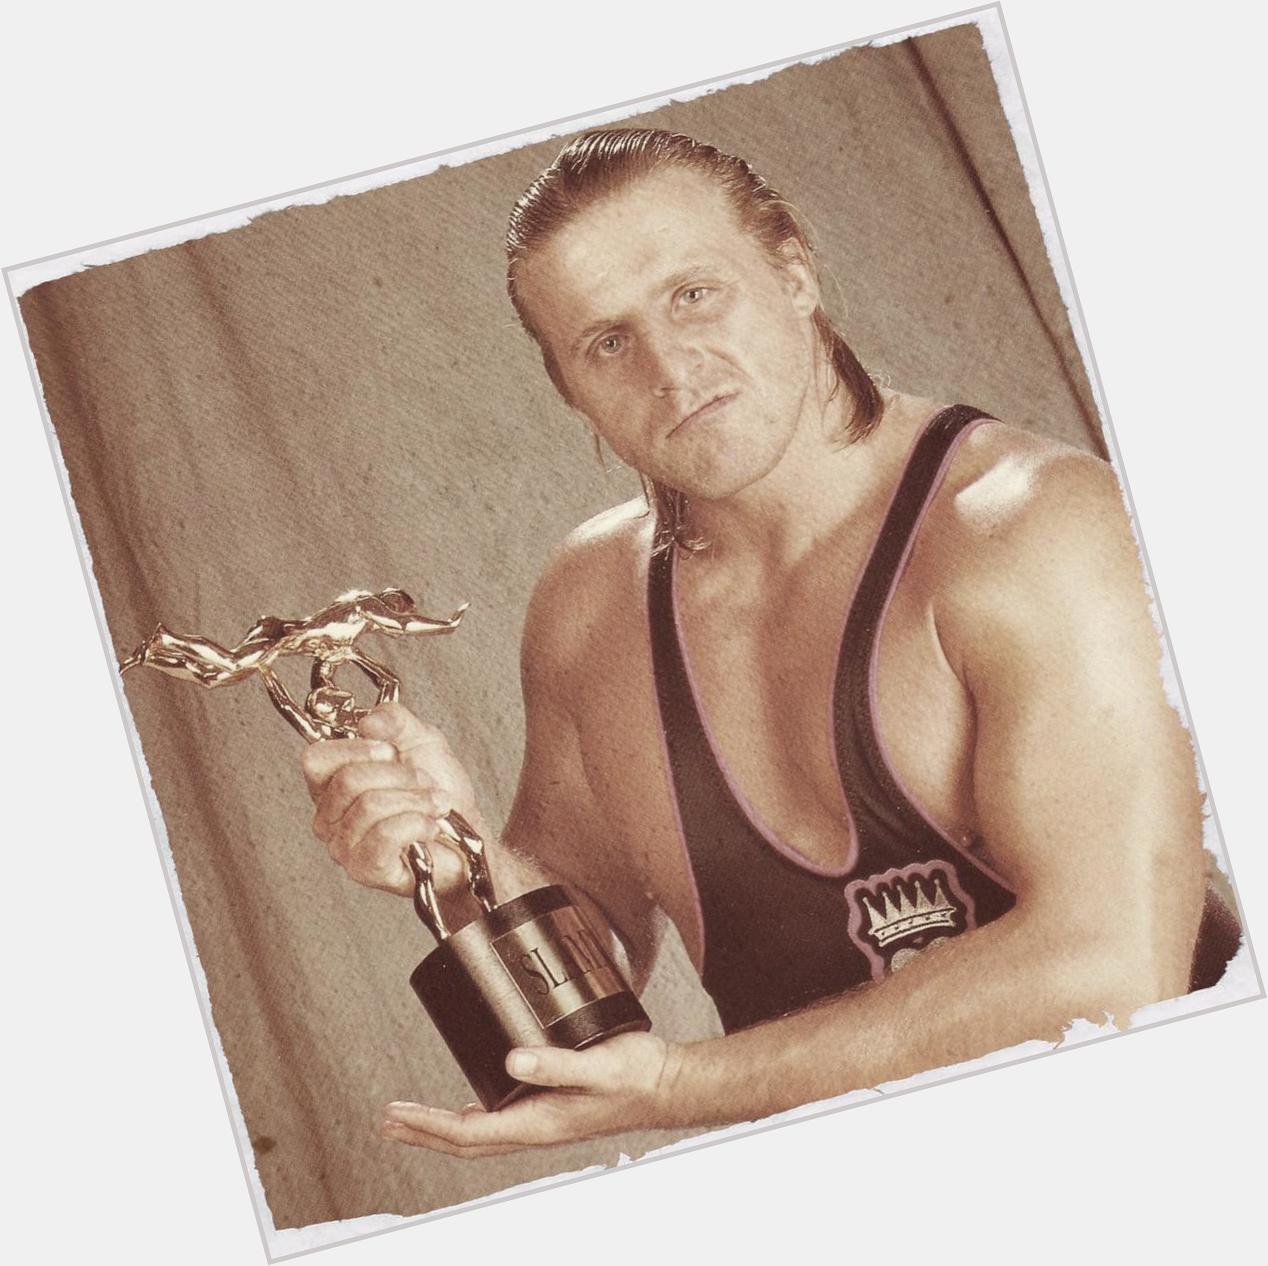 Hands down growing up Owen Hart was my favorite in the WWF. Happy birthday Owen   